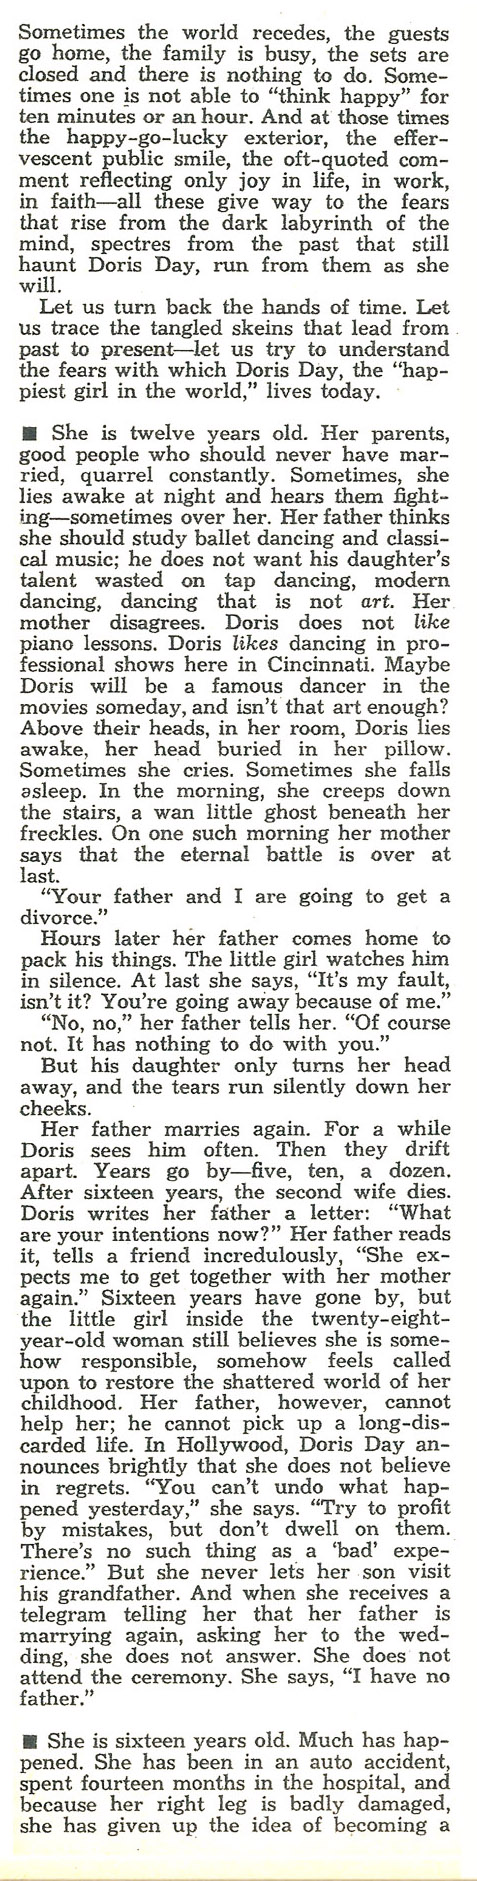 Doris Day #5